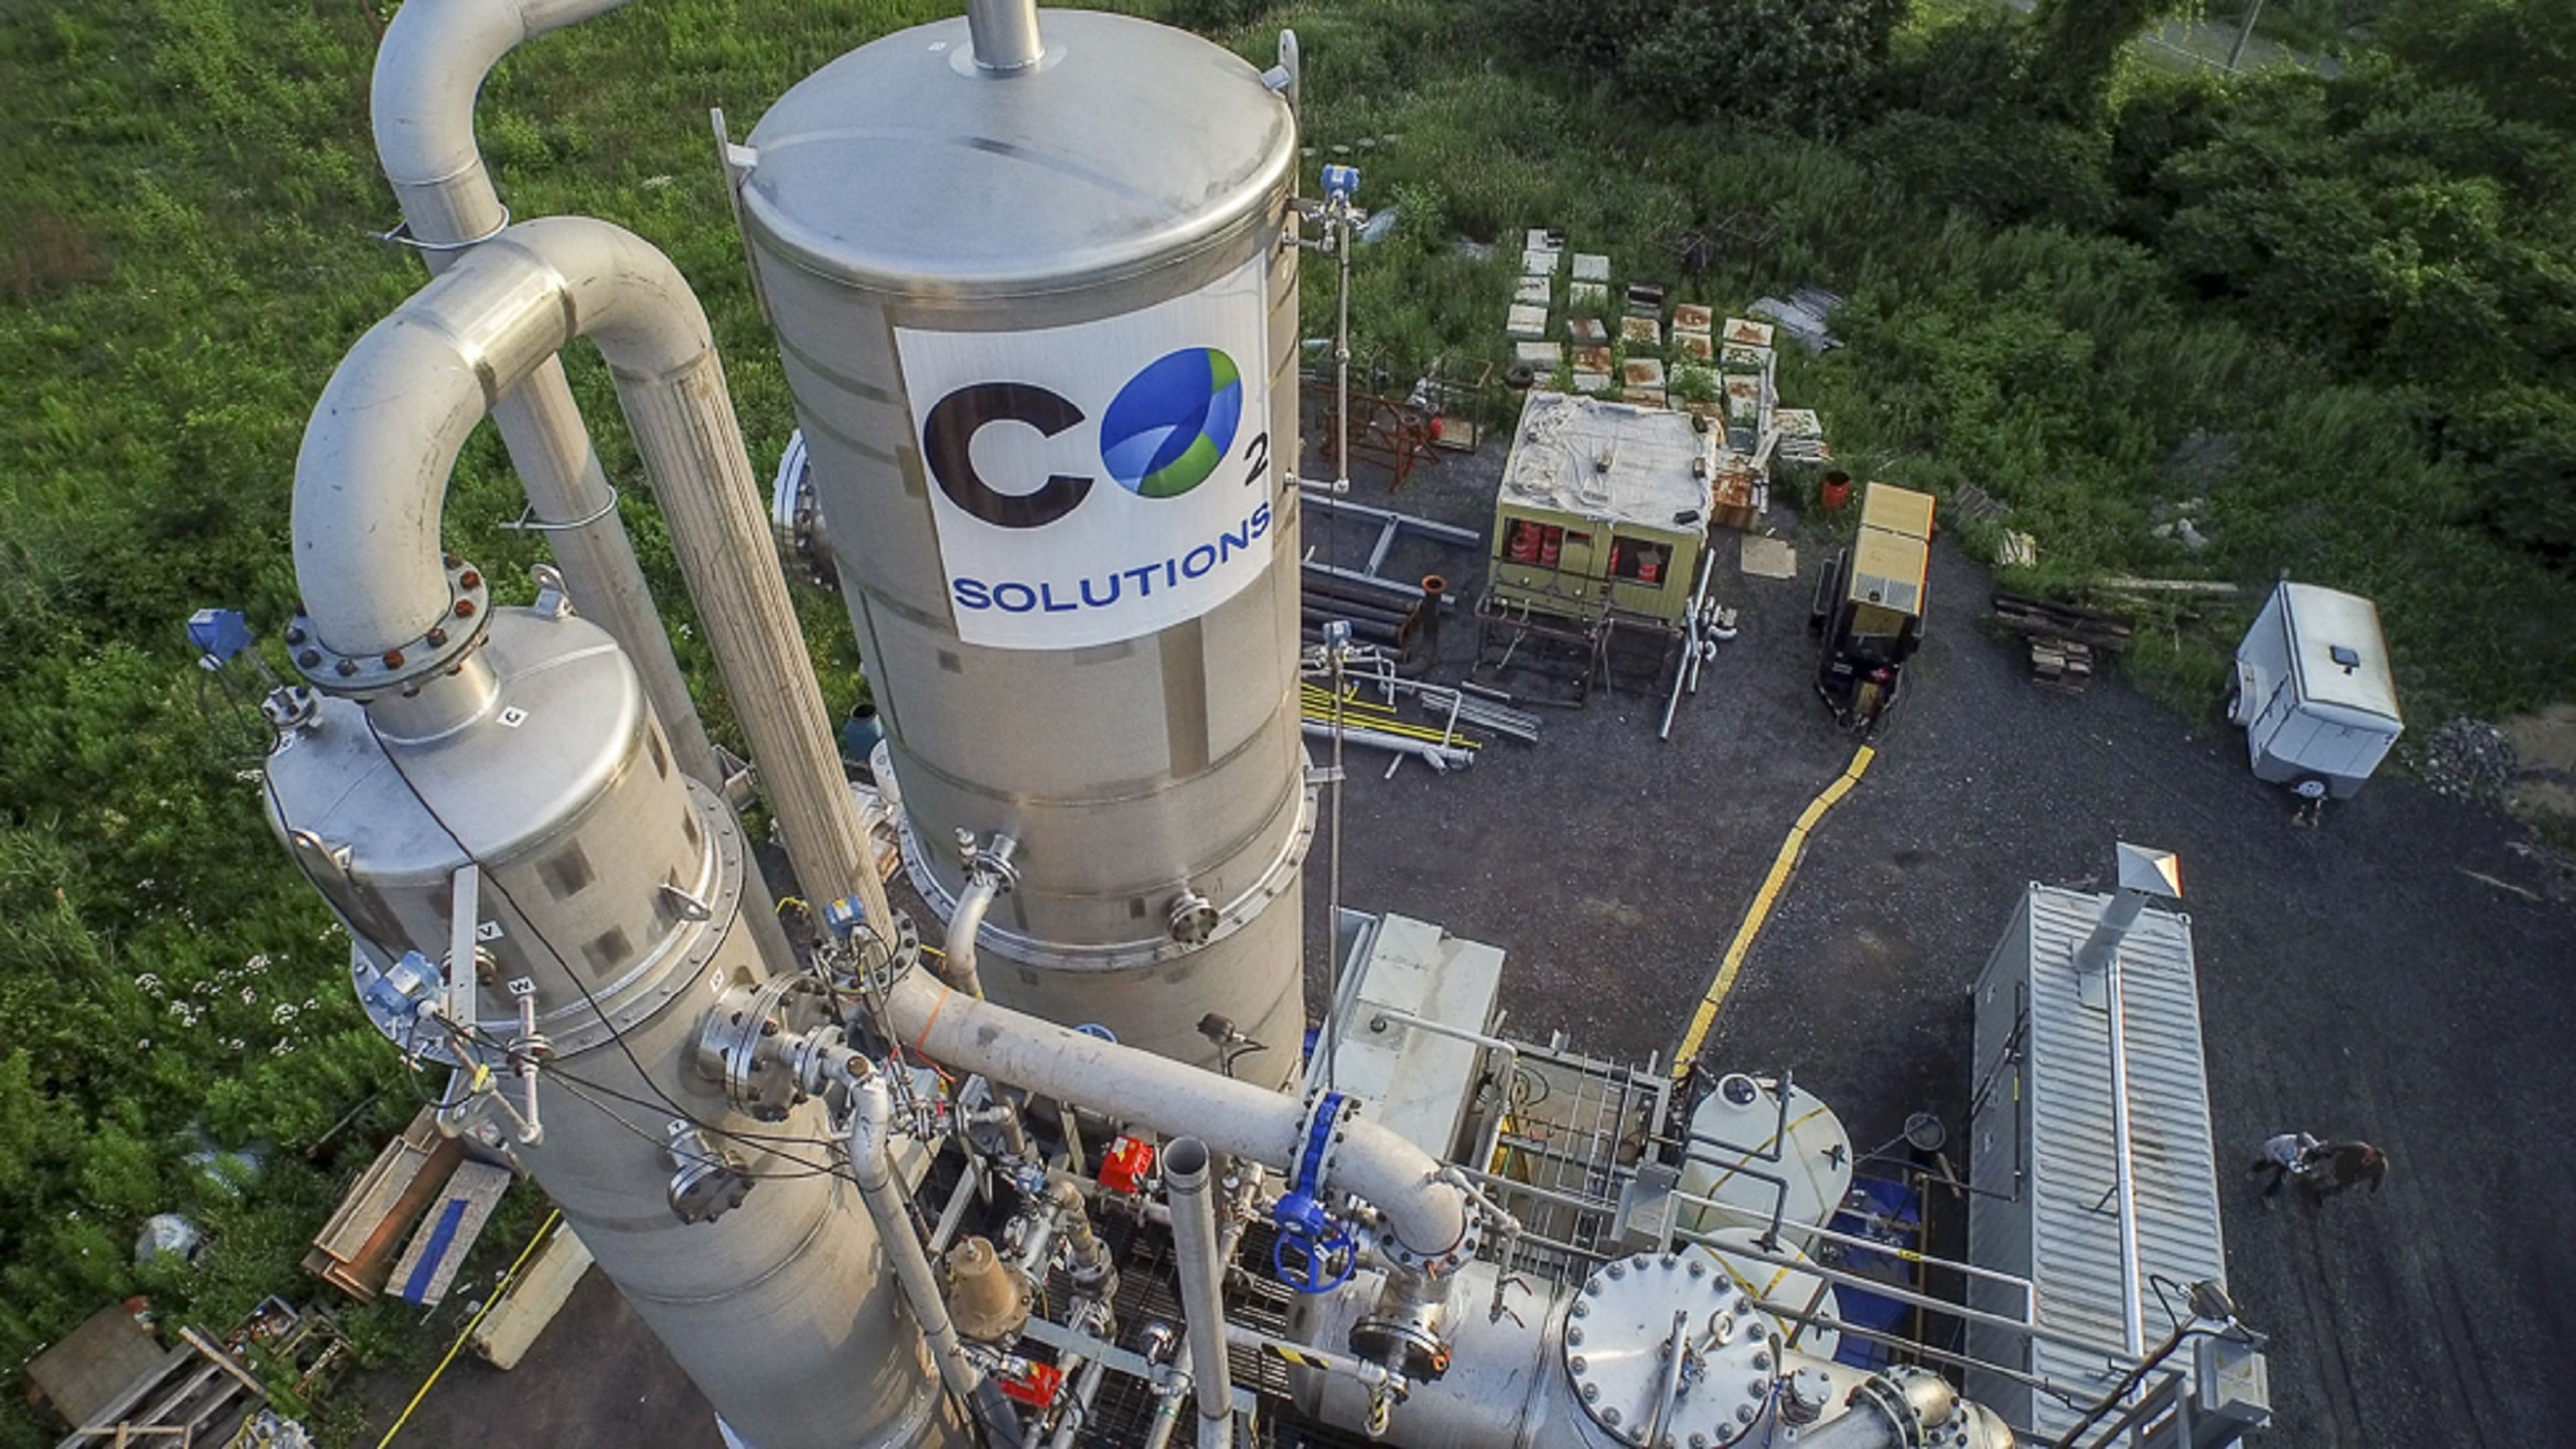 CO2 Solutions’ carbon capture unit in Salaberry-de-Valleyfield, Québec